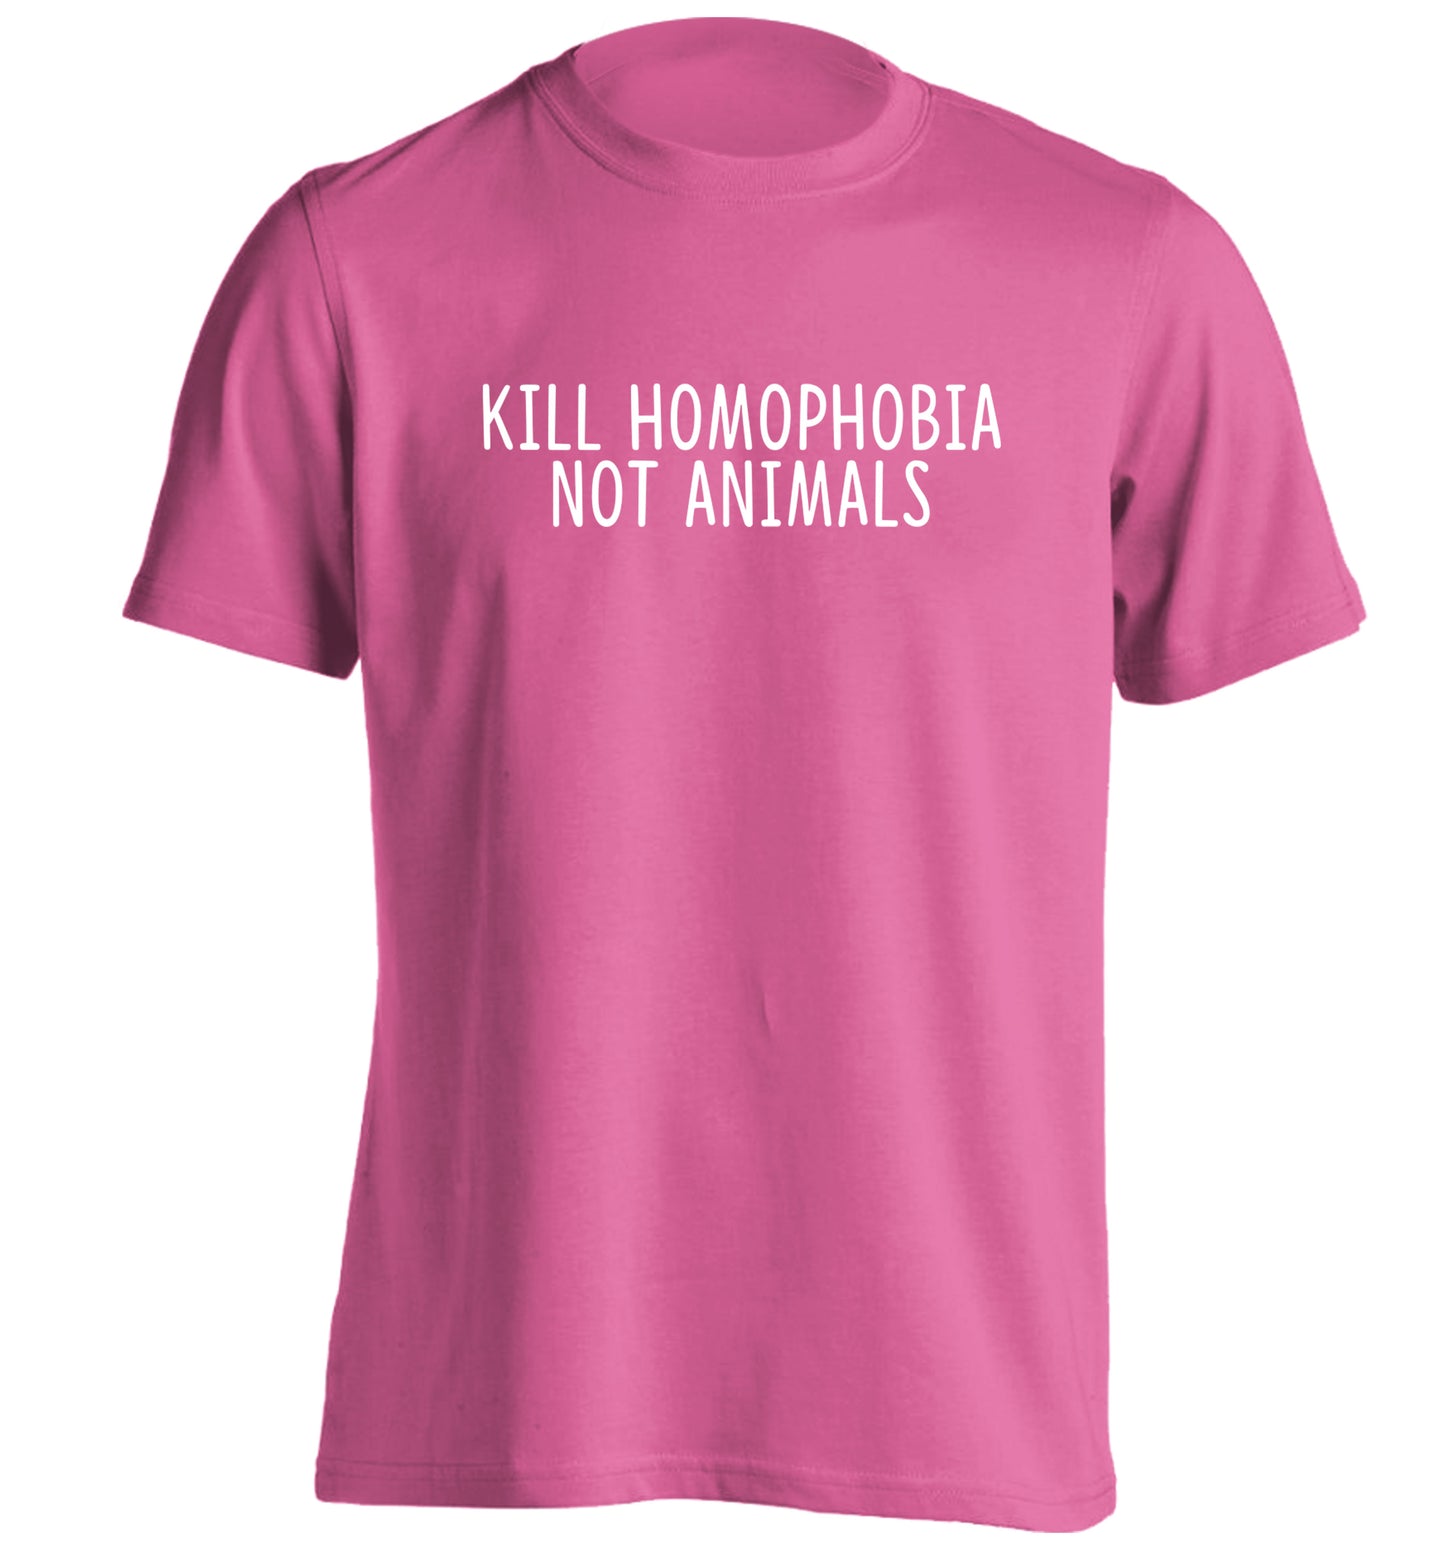 Kill Homophobia Not Animals adults unisex pink Tshirt 2XL